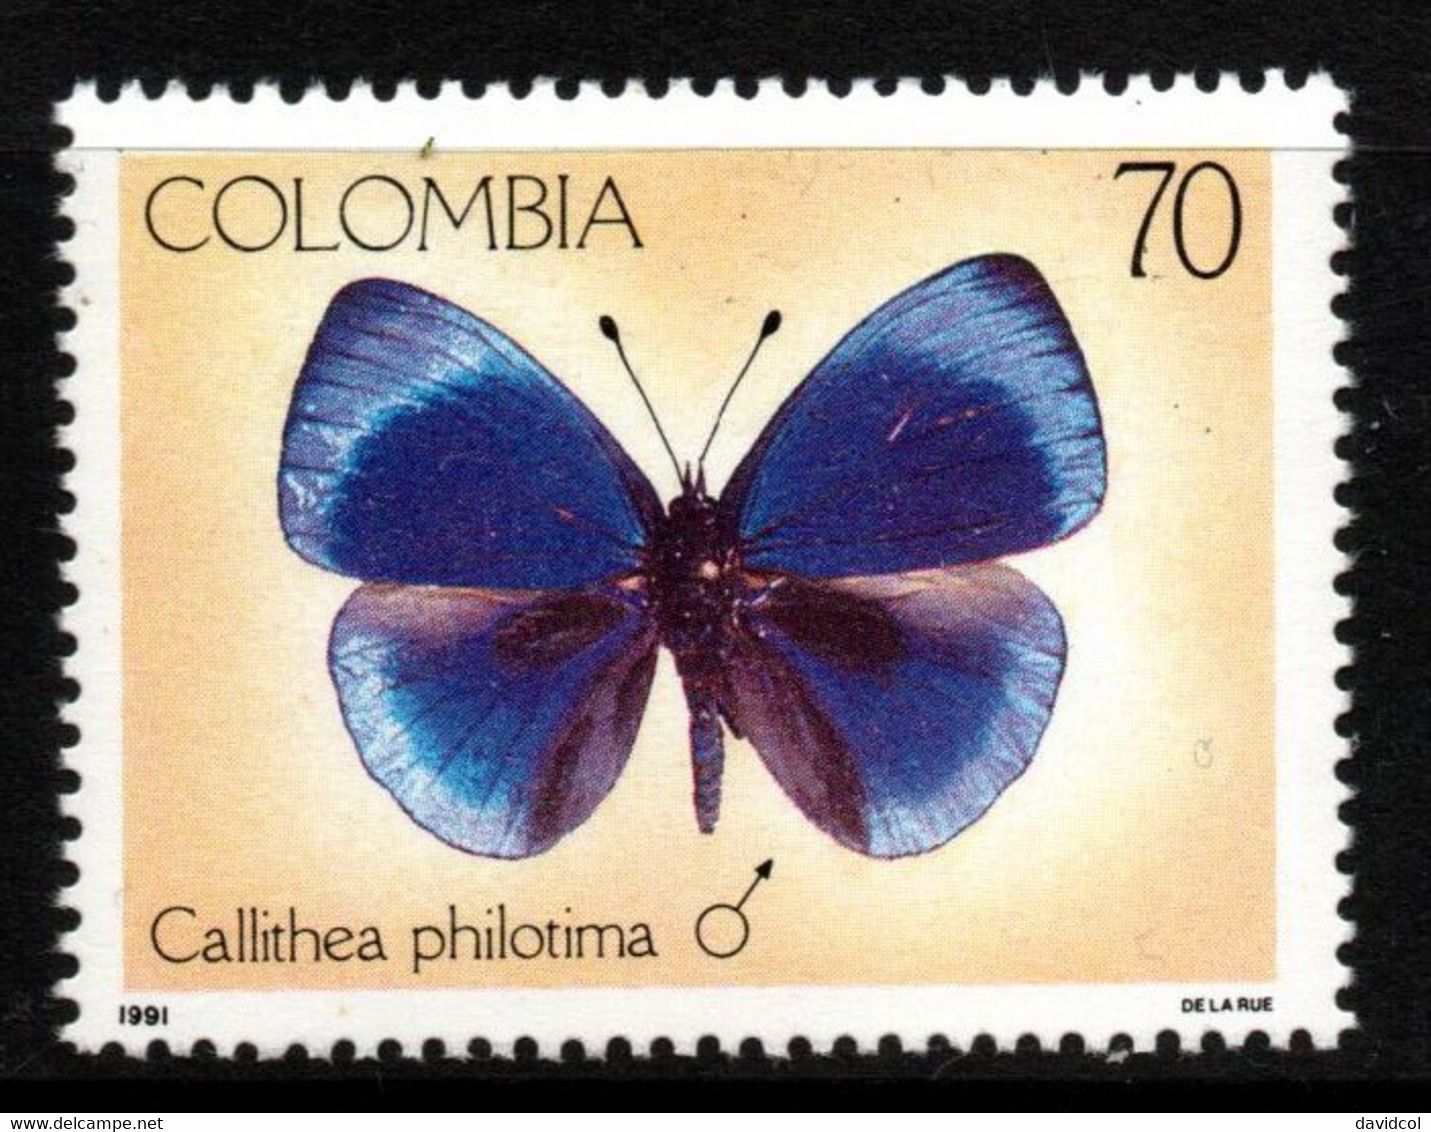 03- KOLUMBIEN - 1991 - MI#:1820 - MNH- BUTTERFLY  (CALLITHEA PHILOTIMA)- INSECTS/FAUNA - Colombia